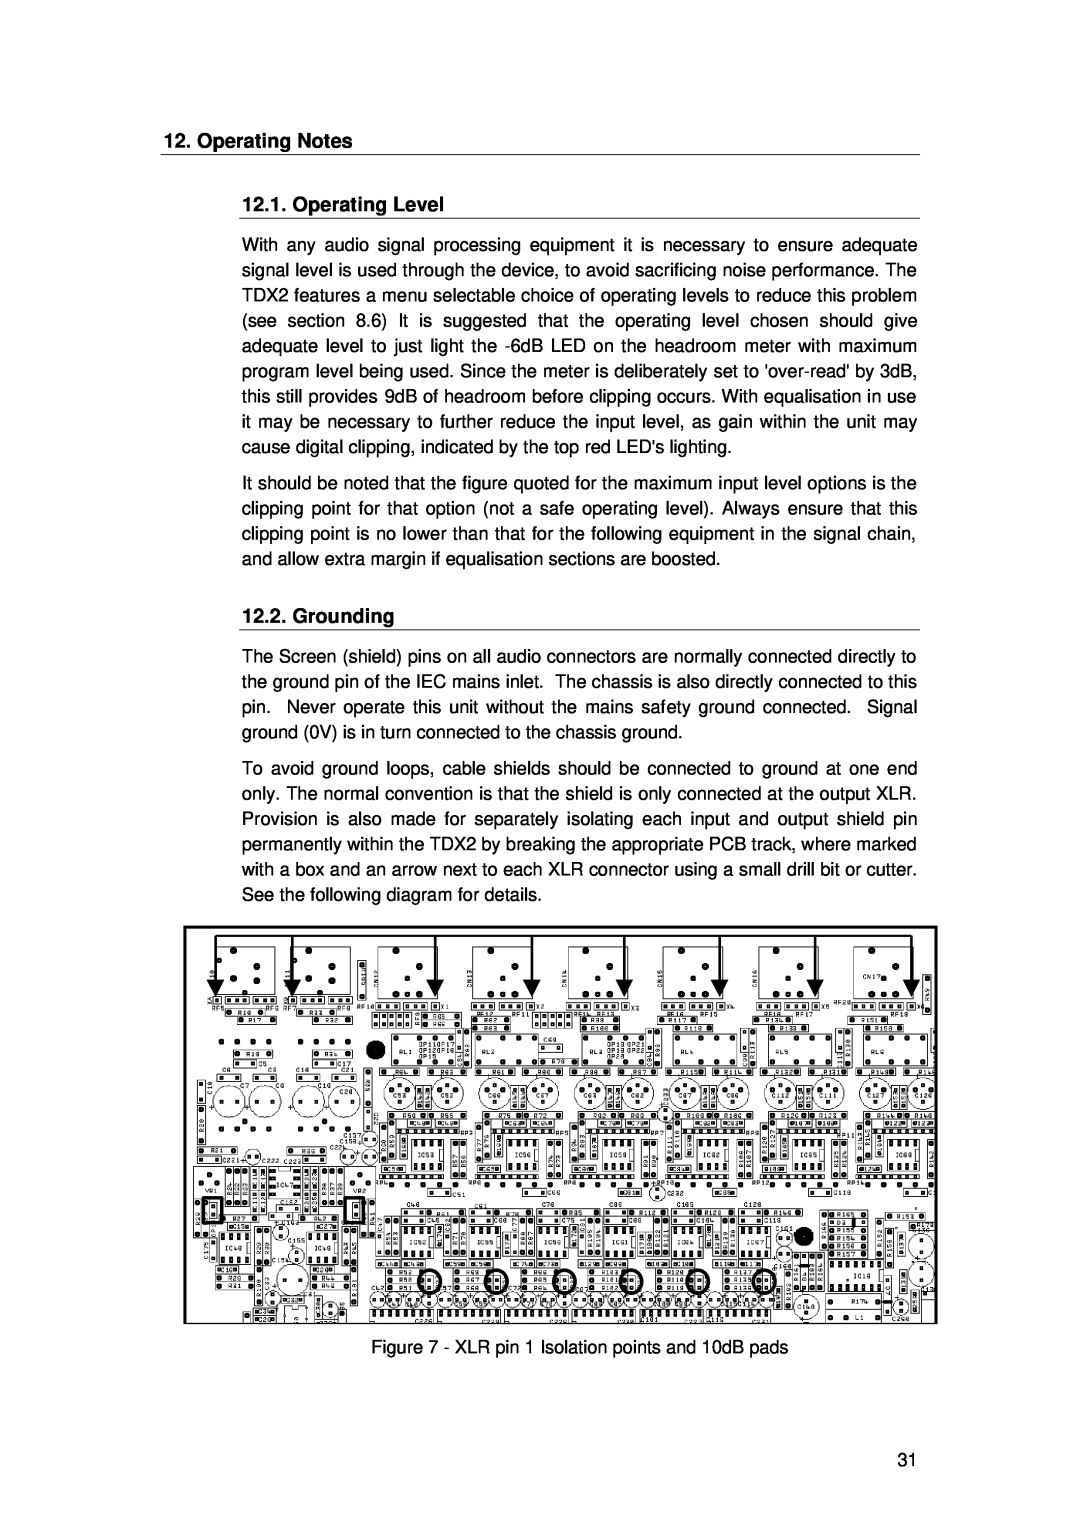 TOA Electronics TDX2 user manual Operating Notes 12.1. Operating Level, Grounding 